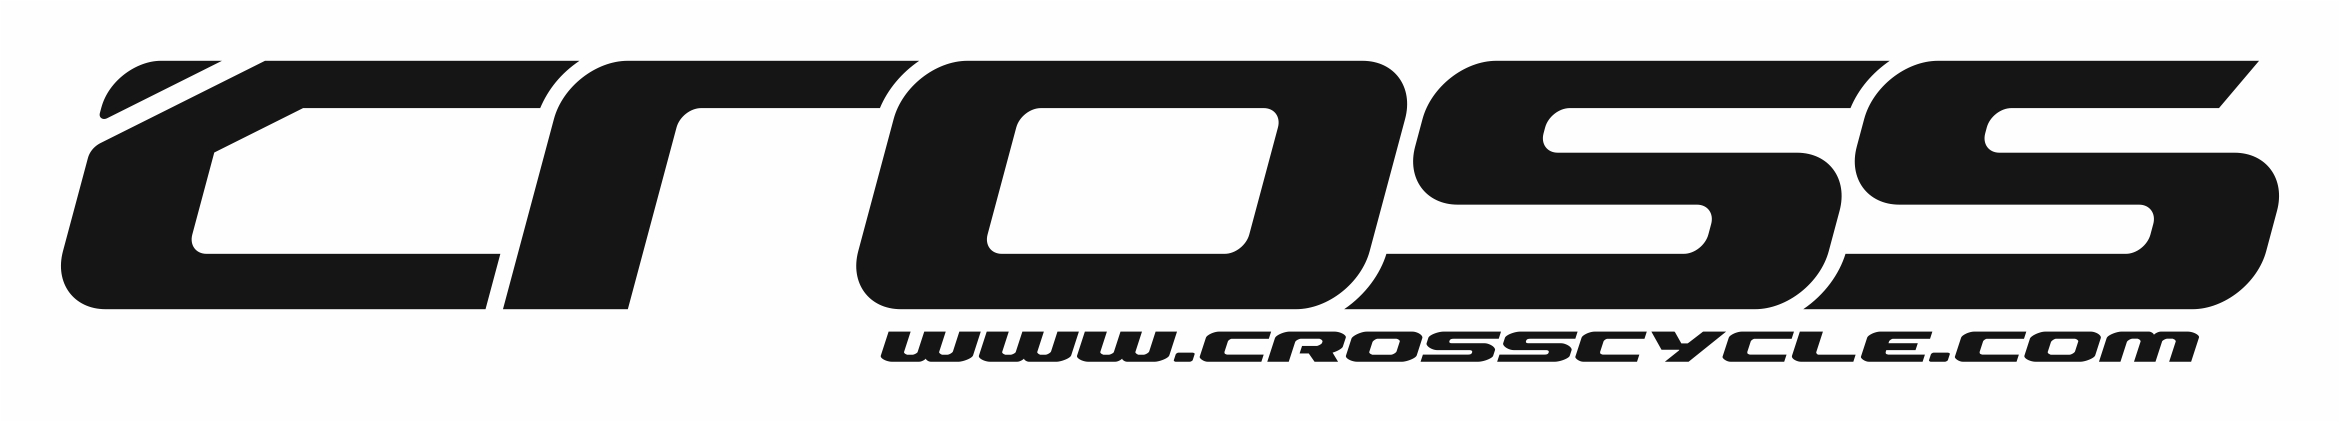 44-cross-logo-2016-with-website.jpg